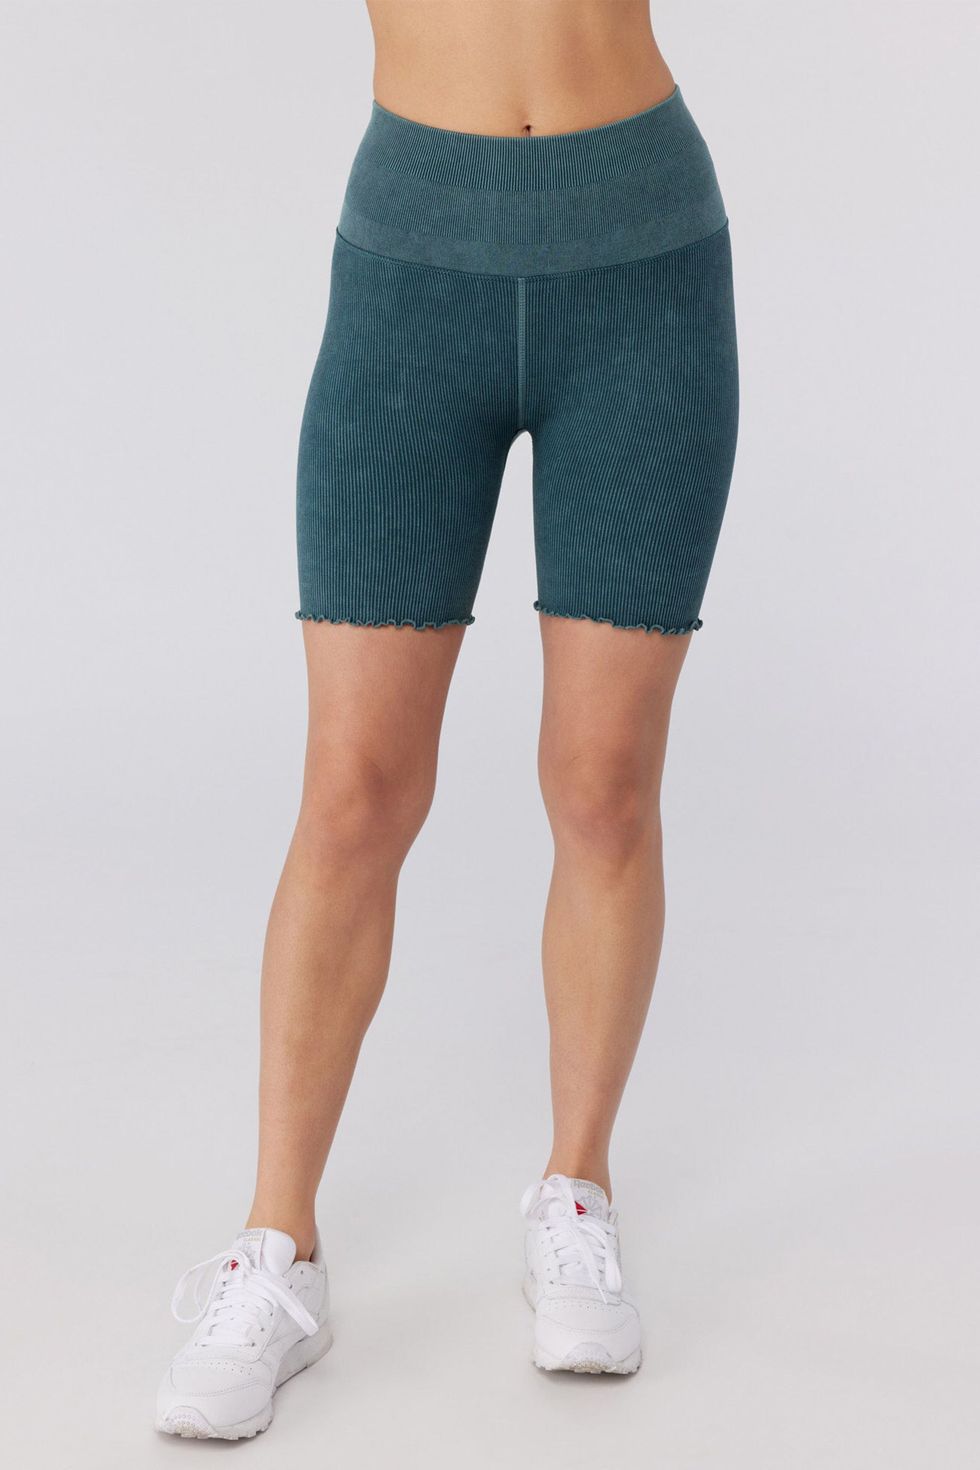 Grey Seamless Top And Bike Shorts Activewear Set